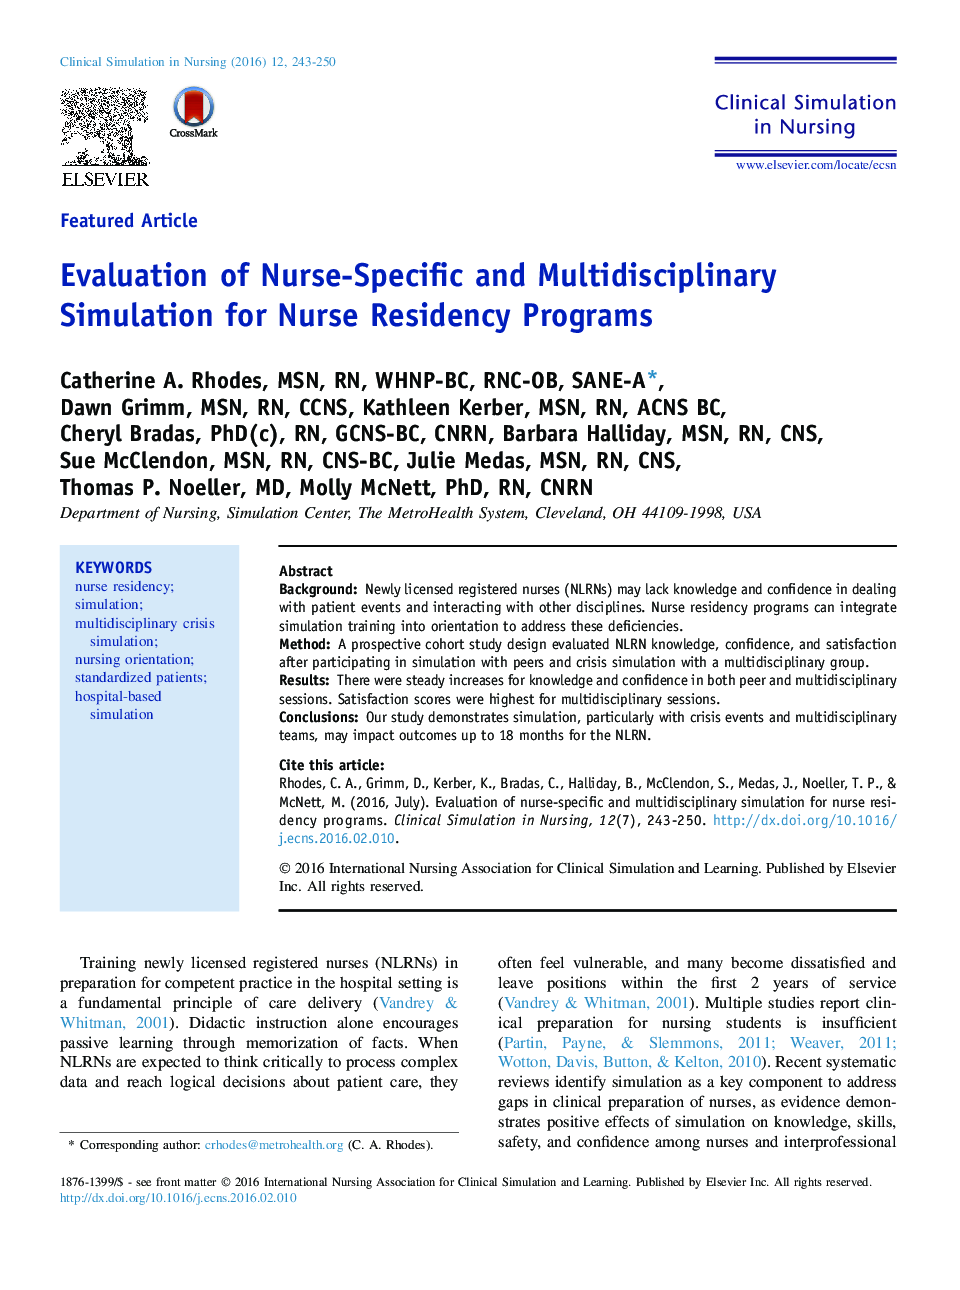 Evaluation of Nurse-Specific and Multidisciplinary Simulation for Nurse Residency Programs